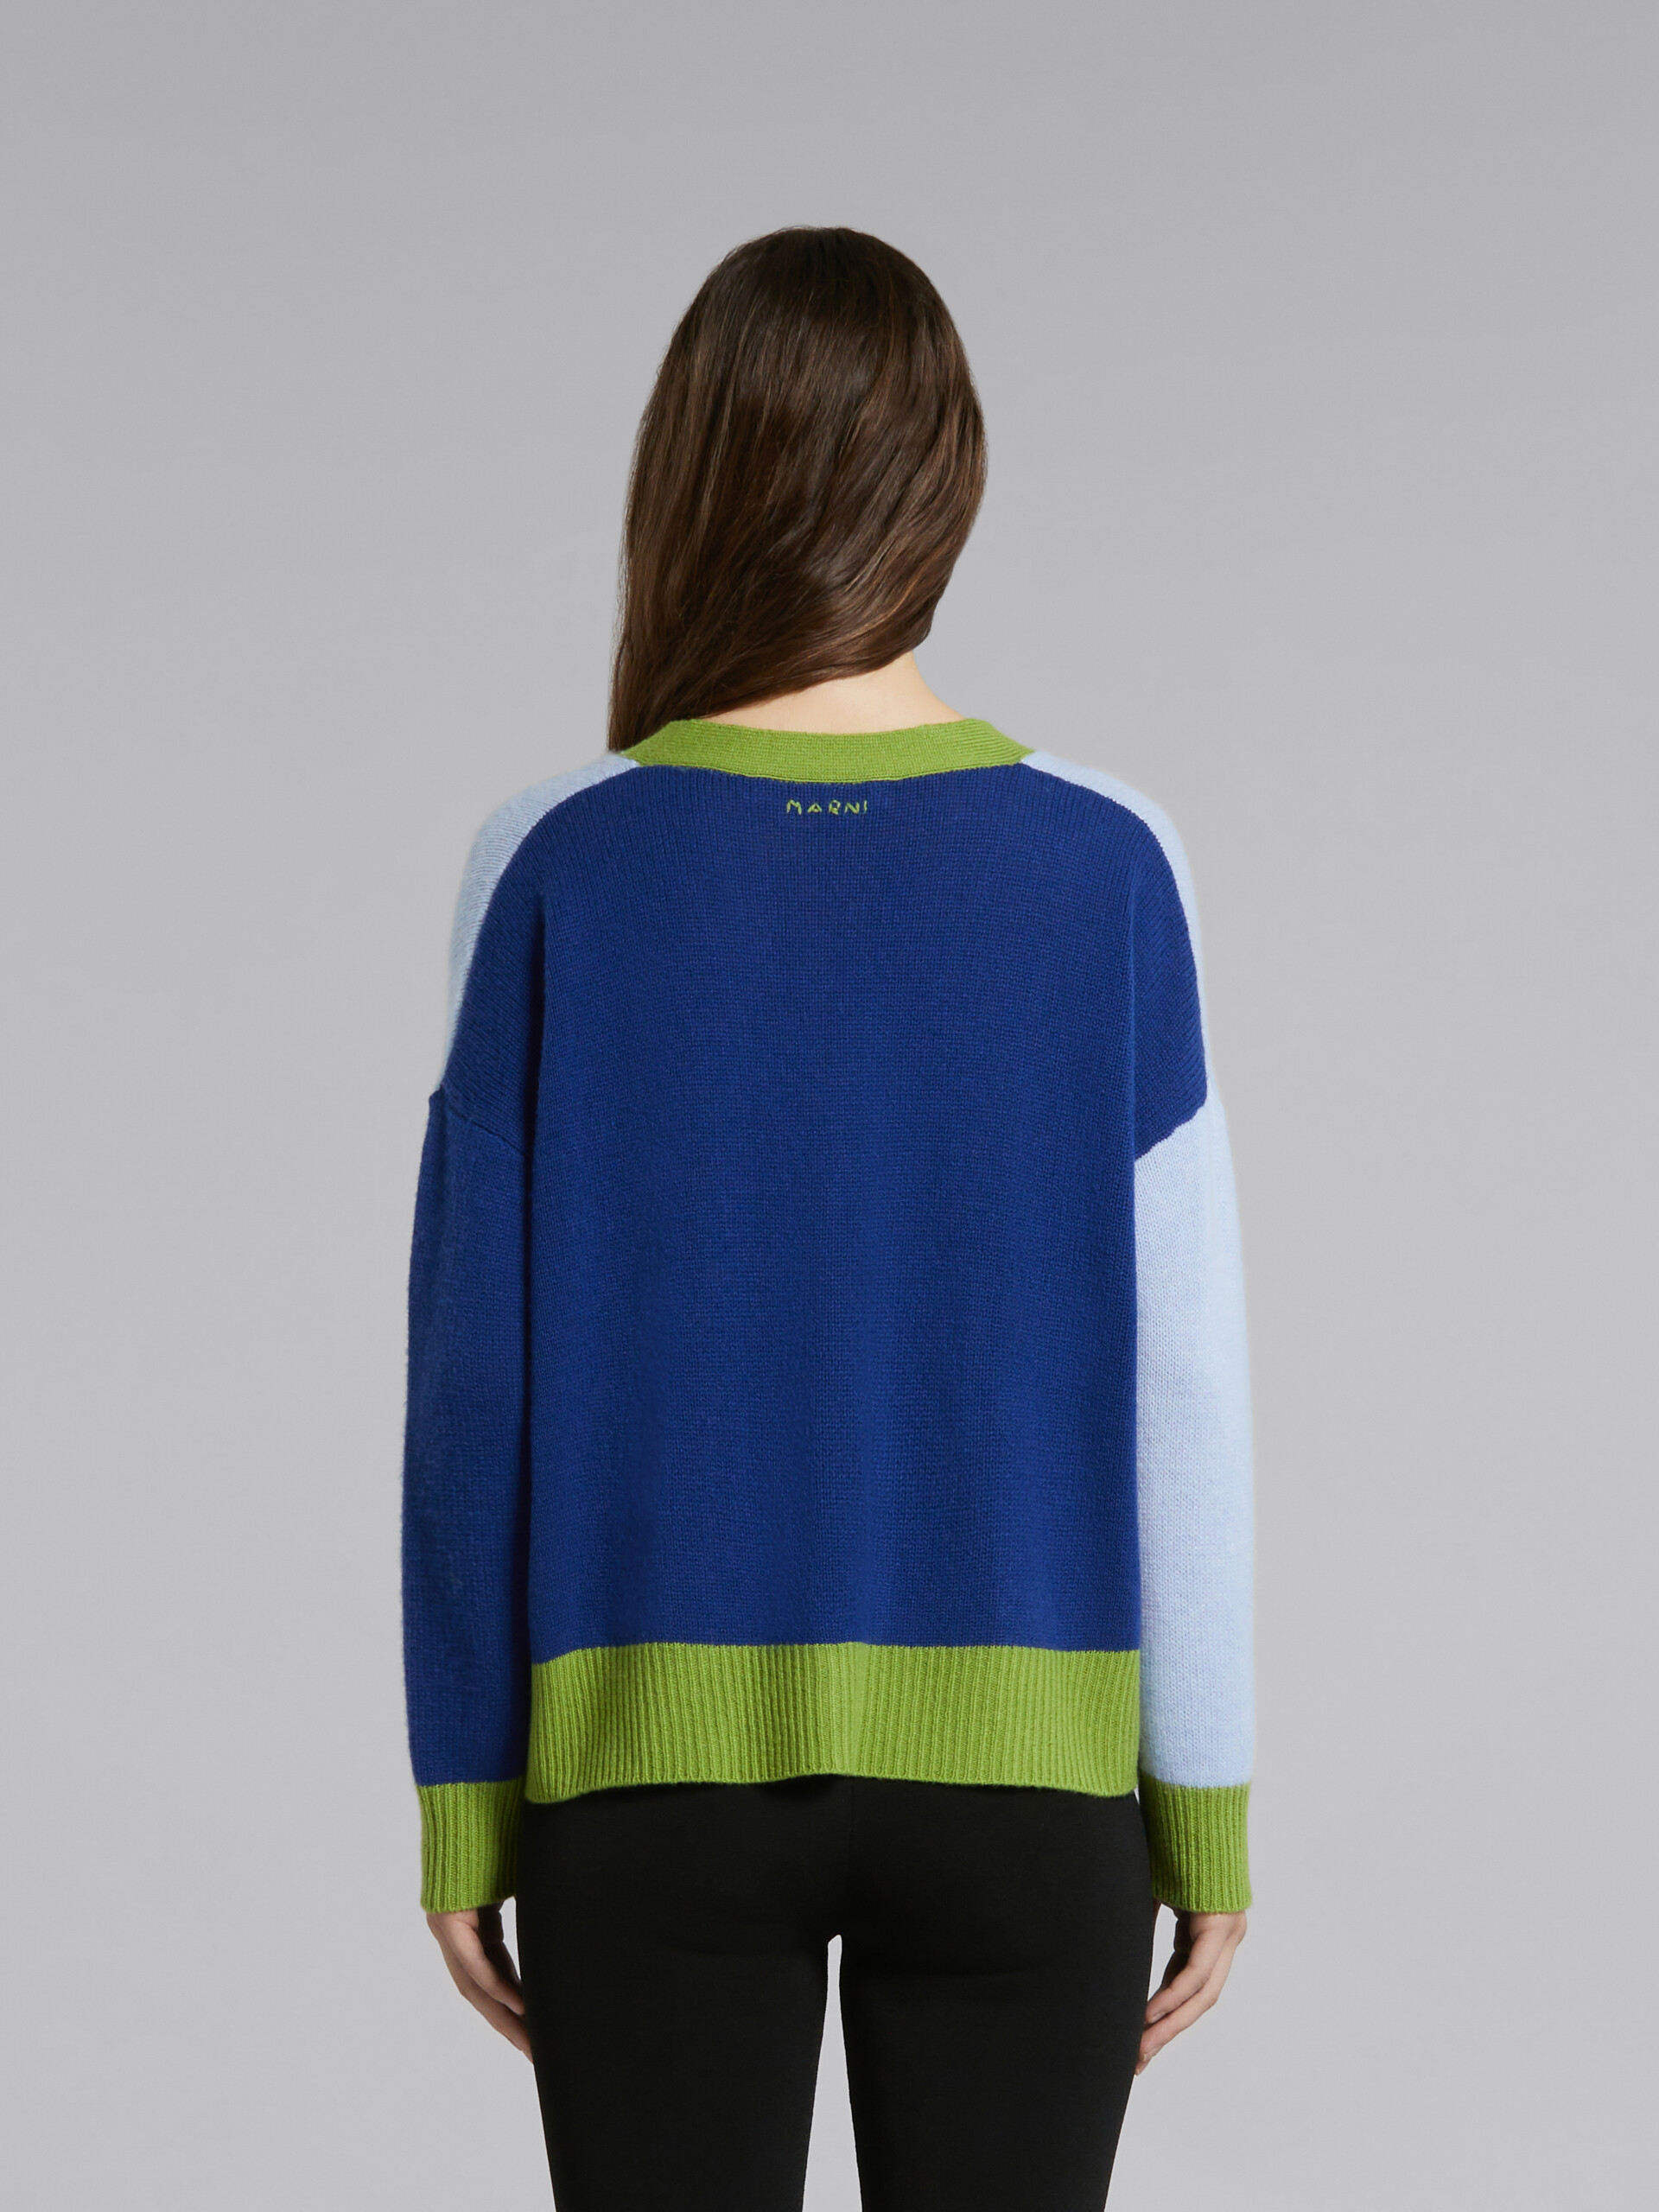 Cárdigan azul de cachemira con bloques de colores - jerseys - Image 3